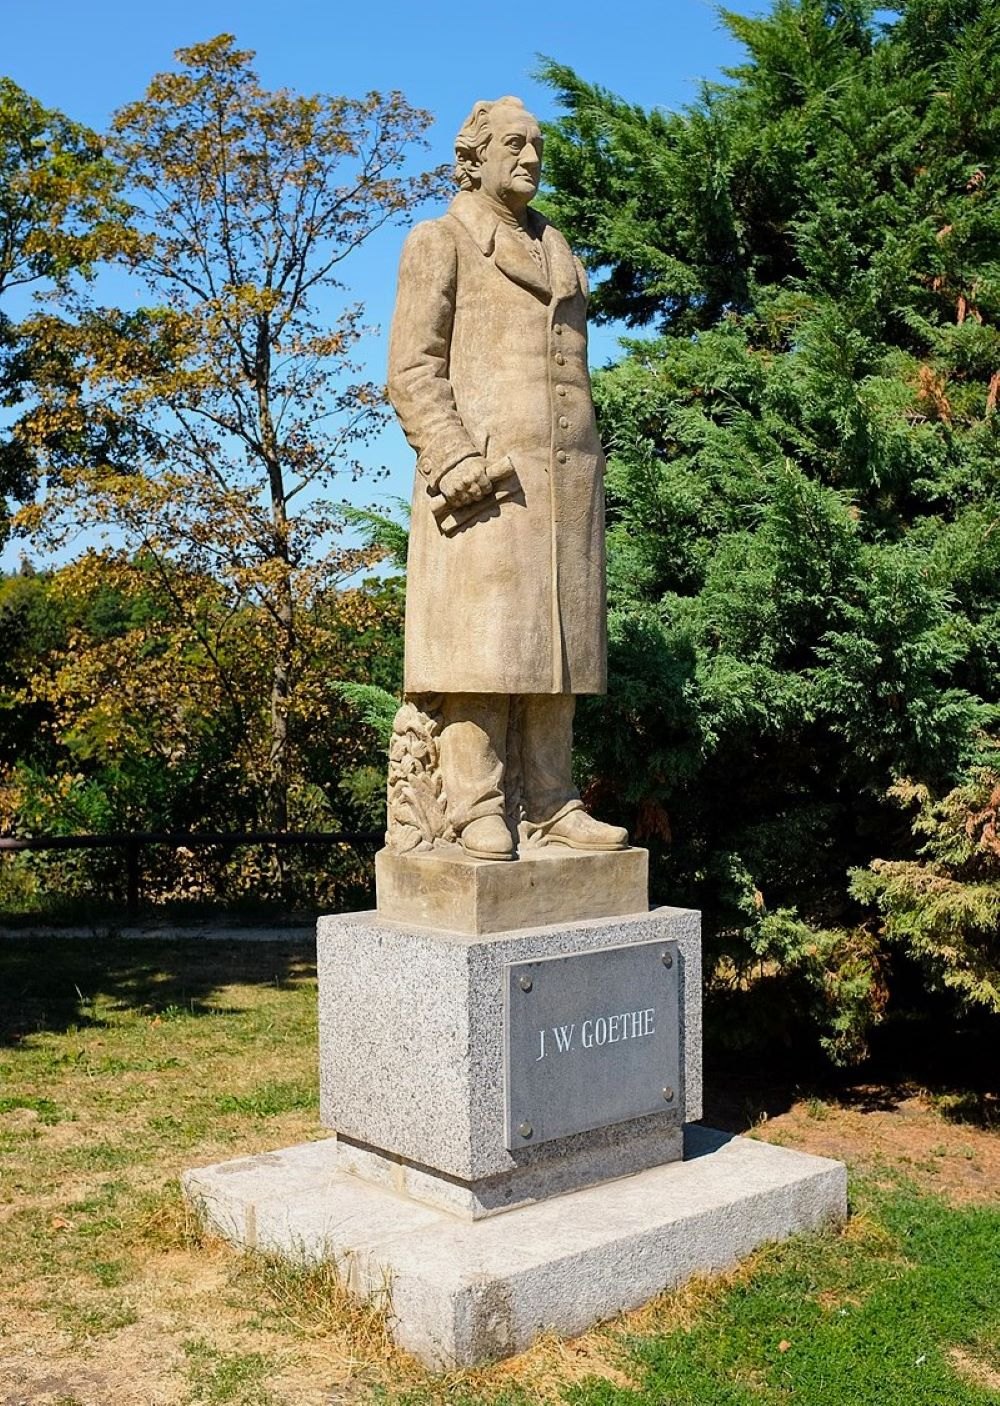 J. W. Goethe's monument